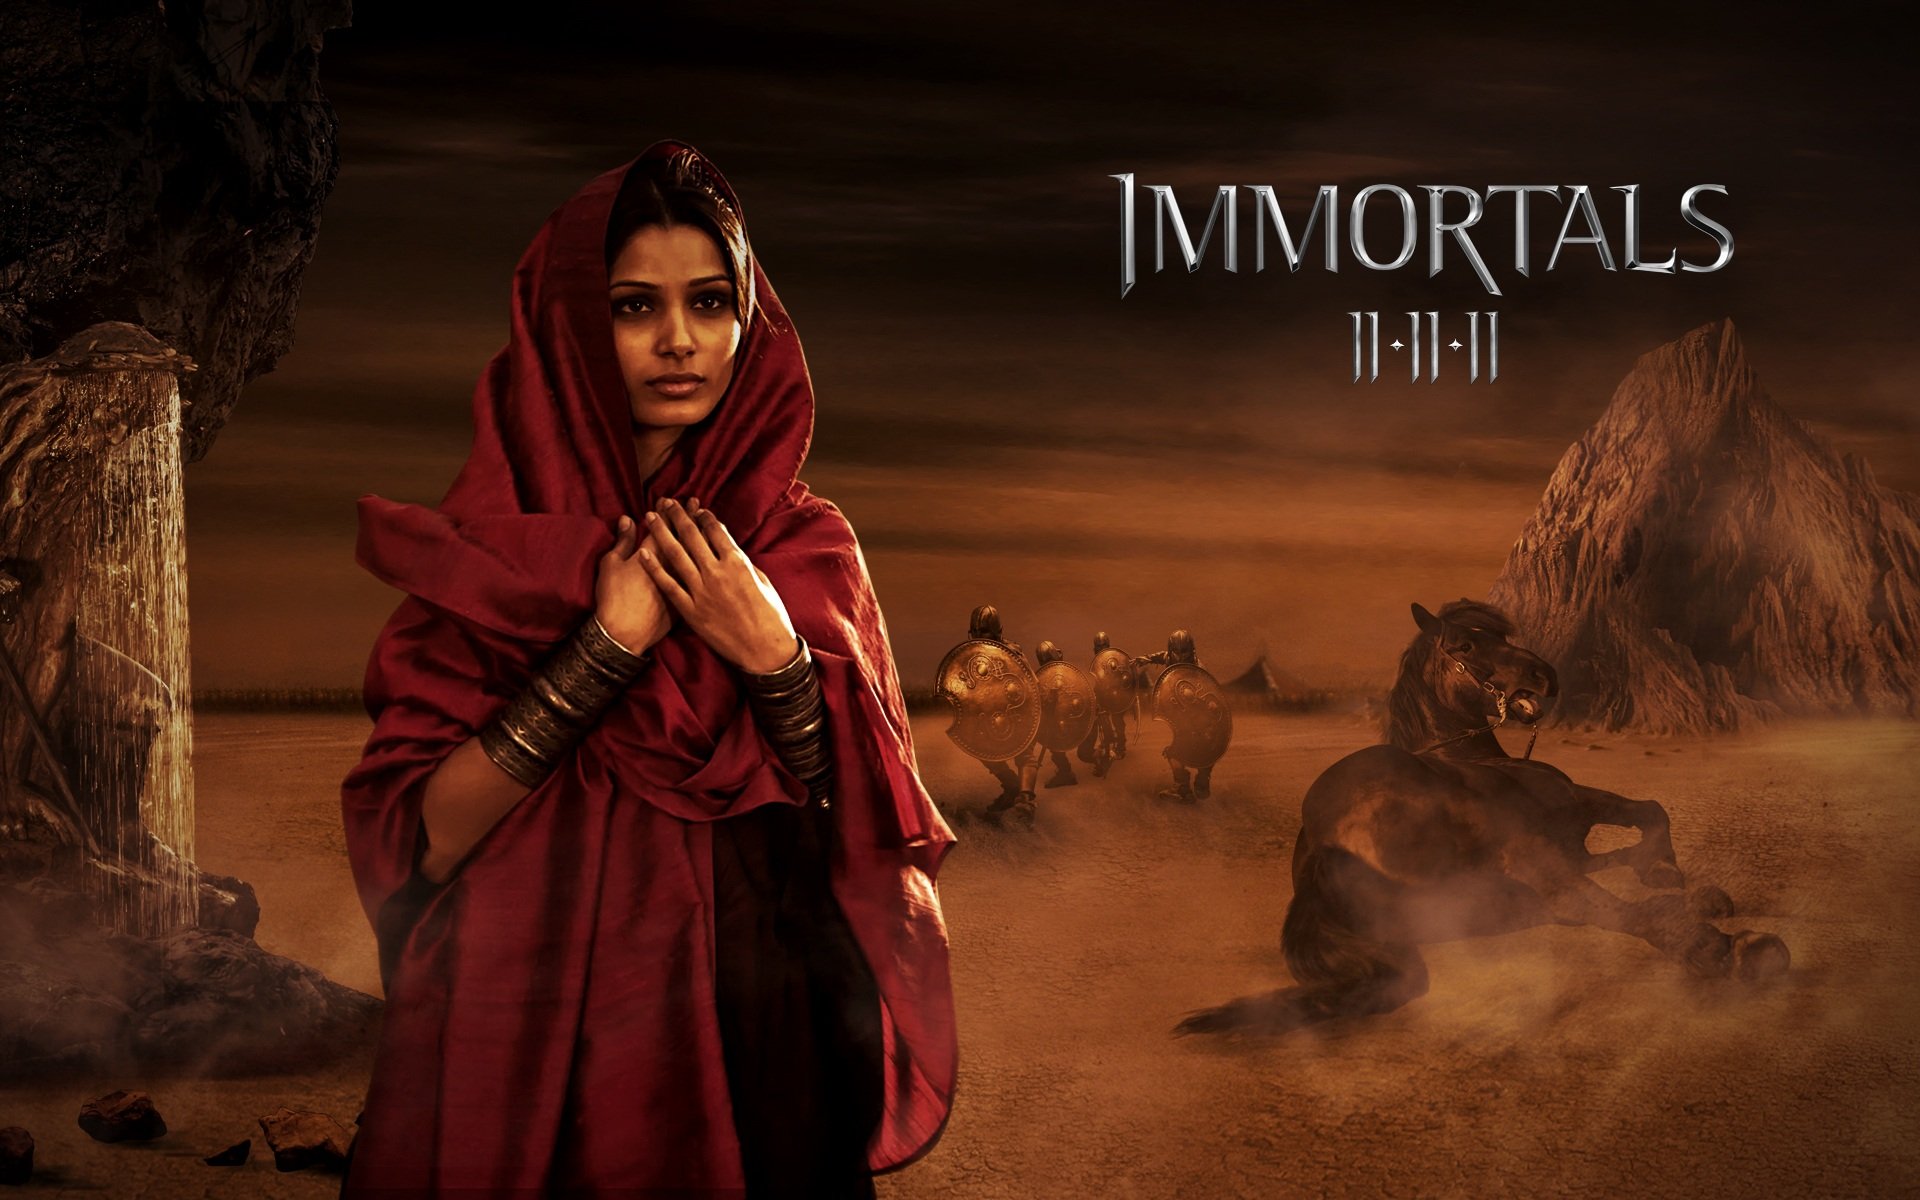 immortals, Fantasy, Action, Adventure, Movie, Film, Poster Wallpaper